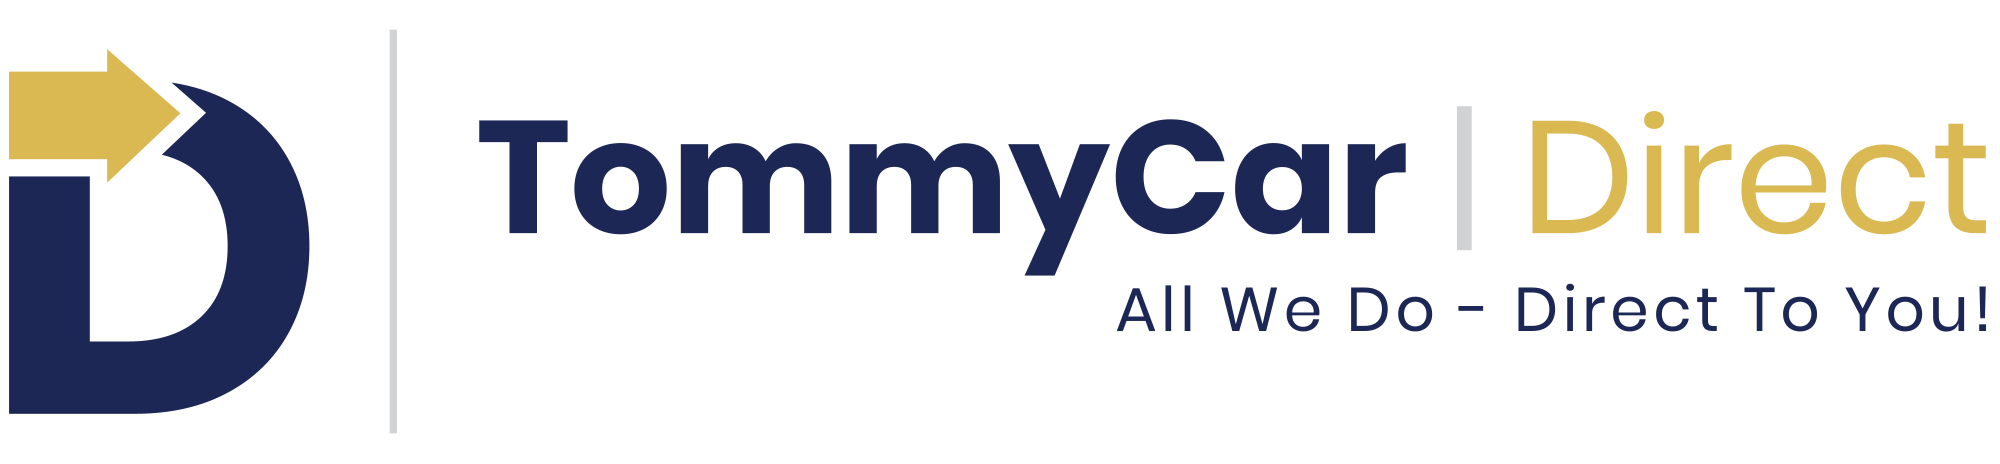 TommyCar Direct Logo